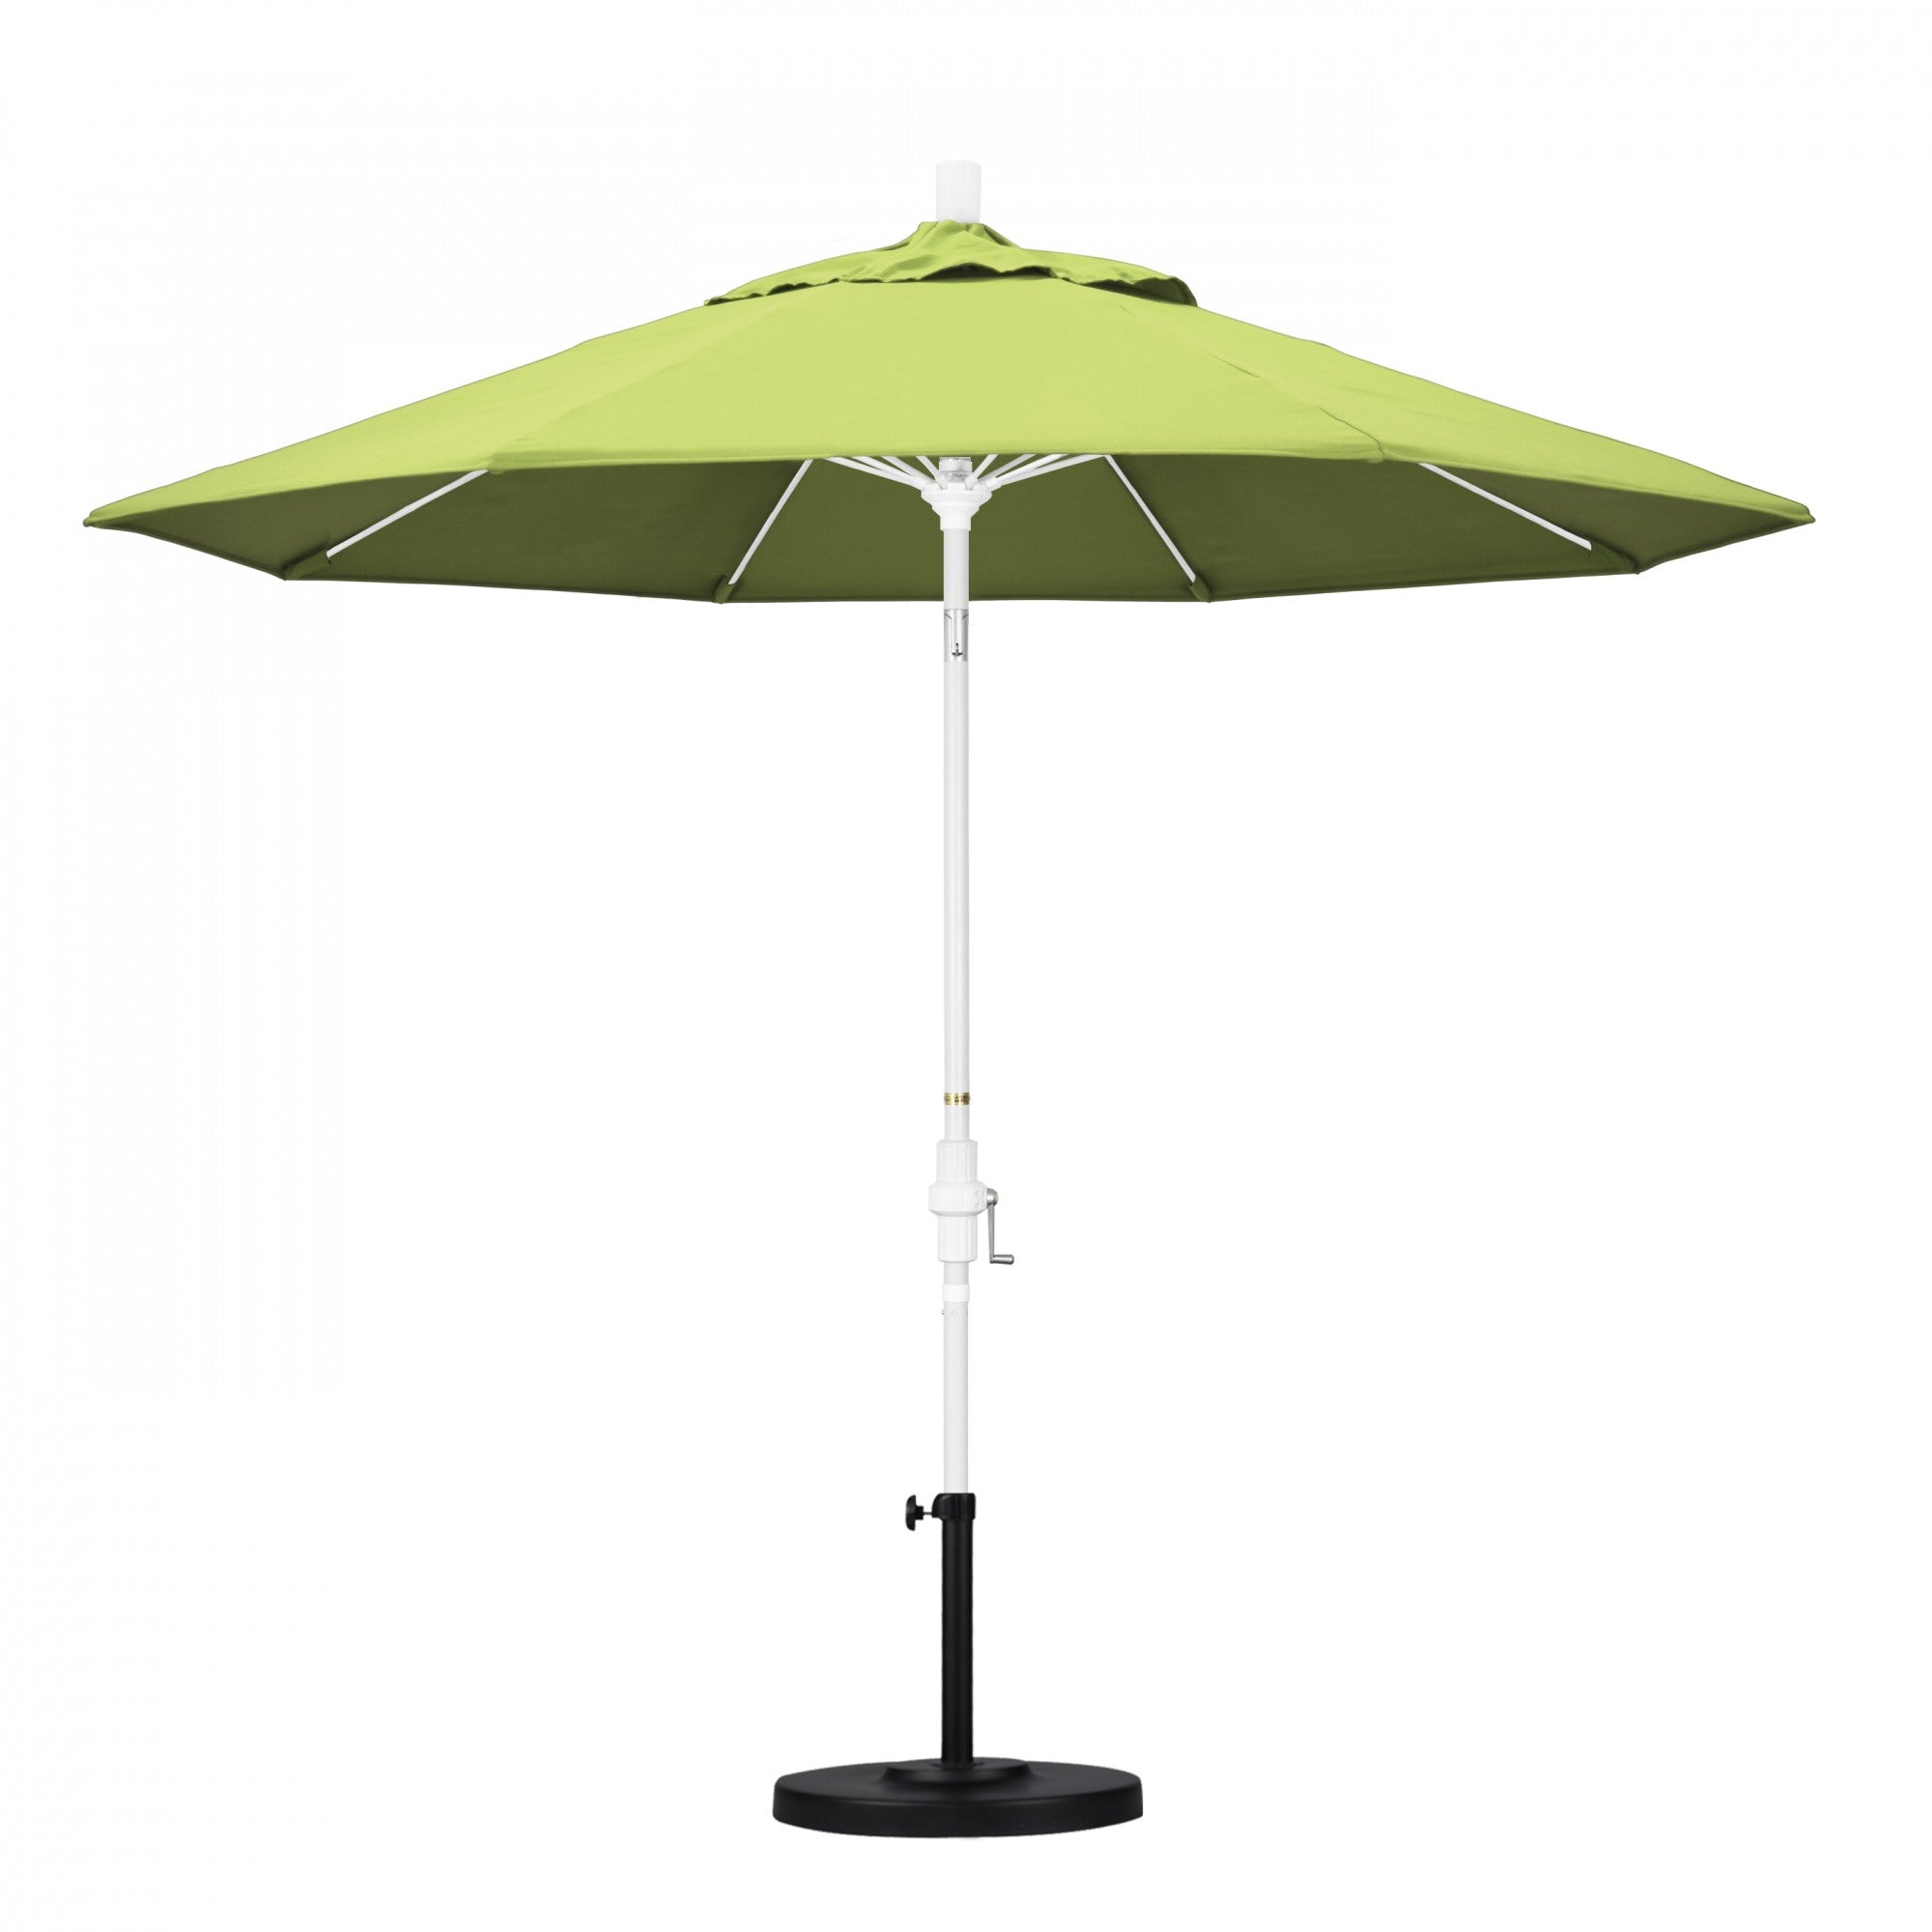 California Umbrella - 9' - Patio Umbrella Umbrella - Aluminum Pole - Parrot - Sunbrella  - GSCUF908170-5405